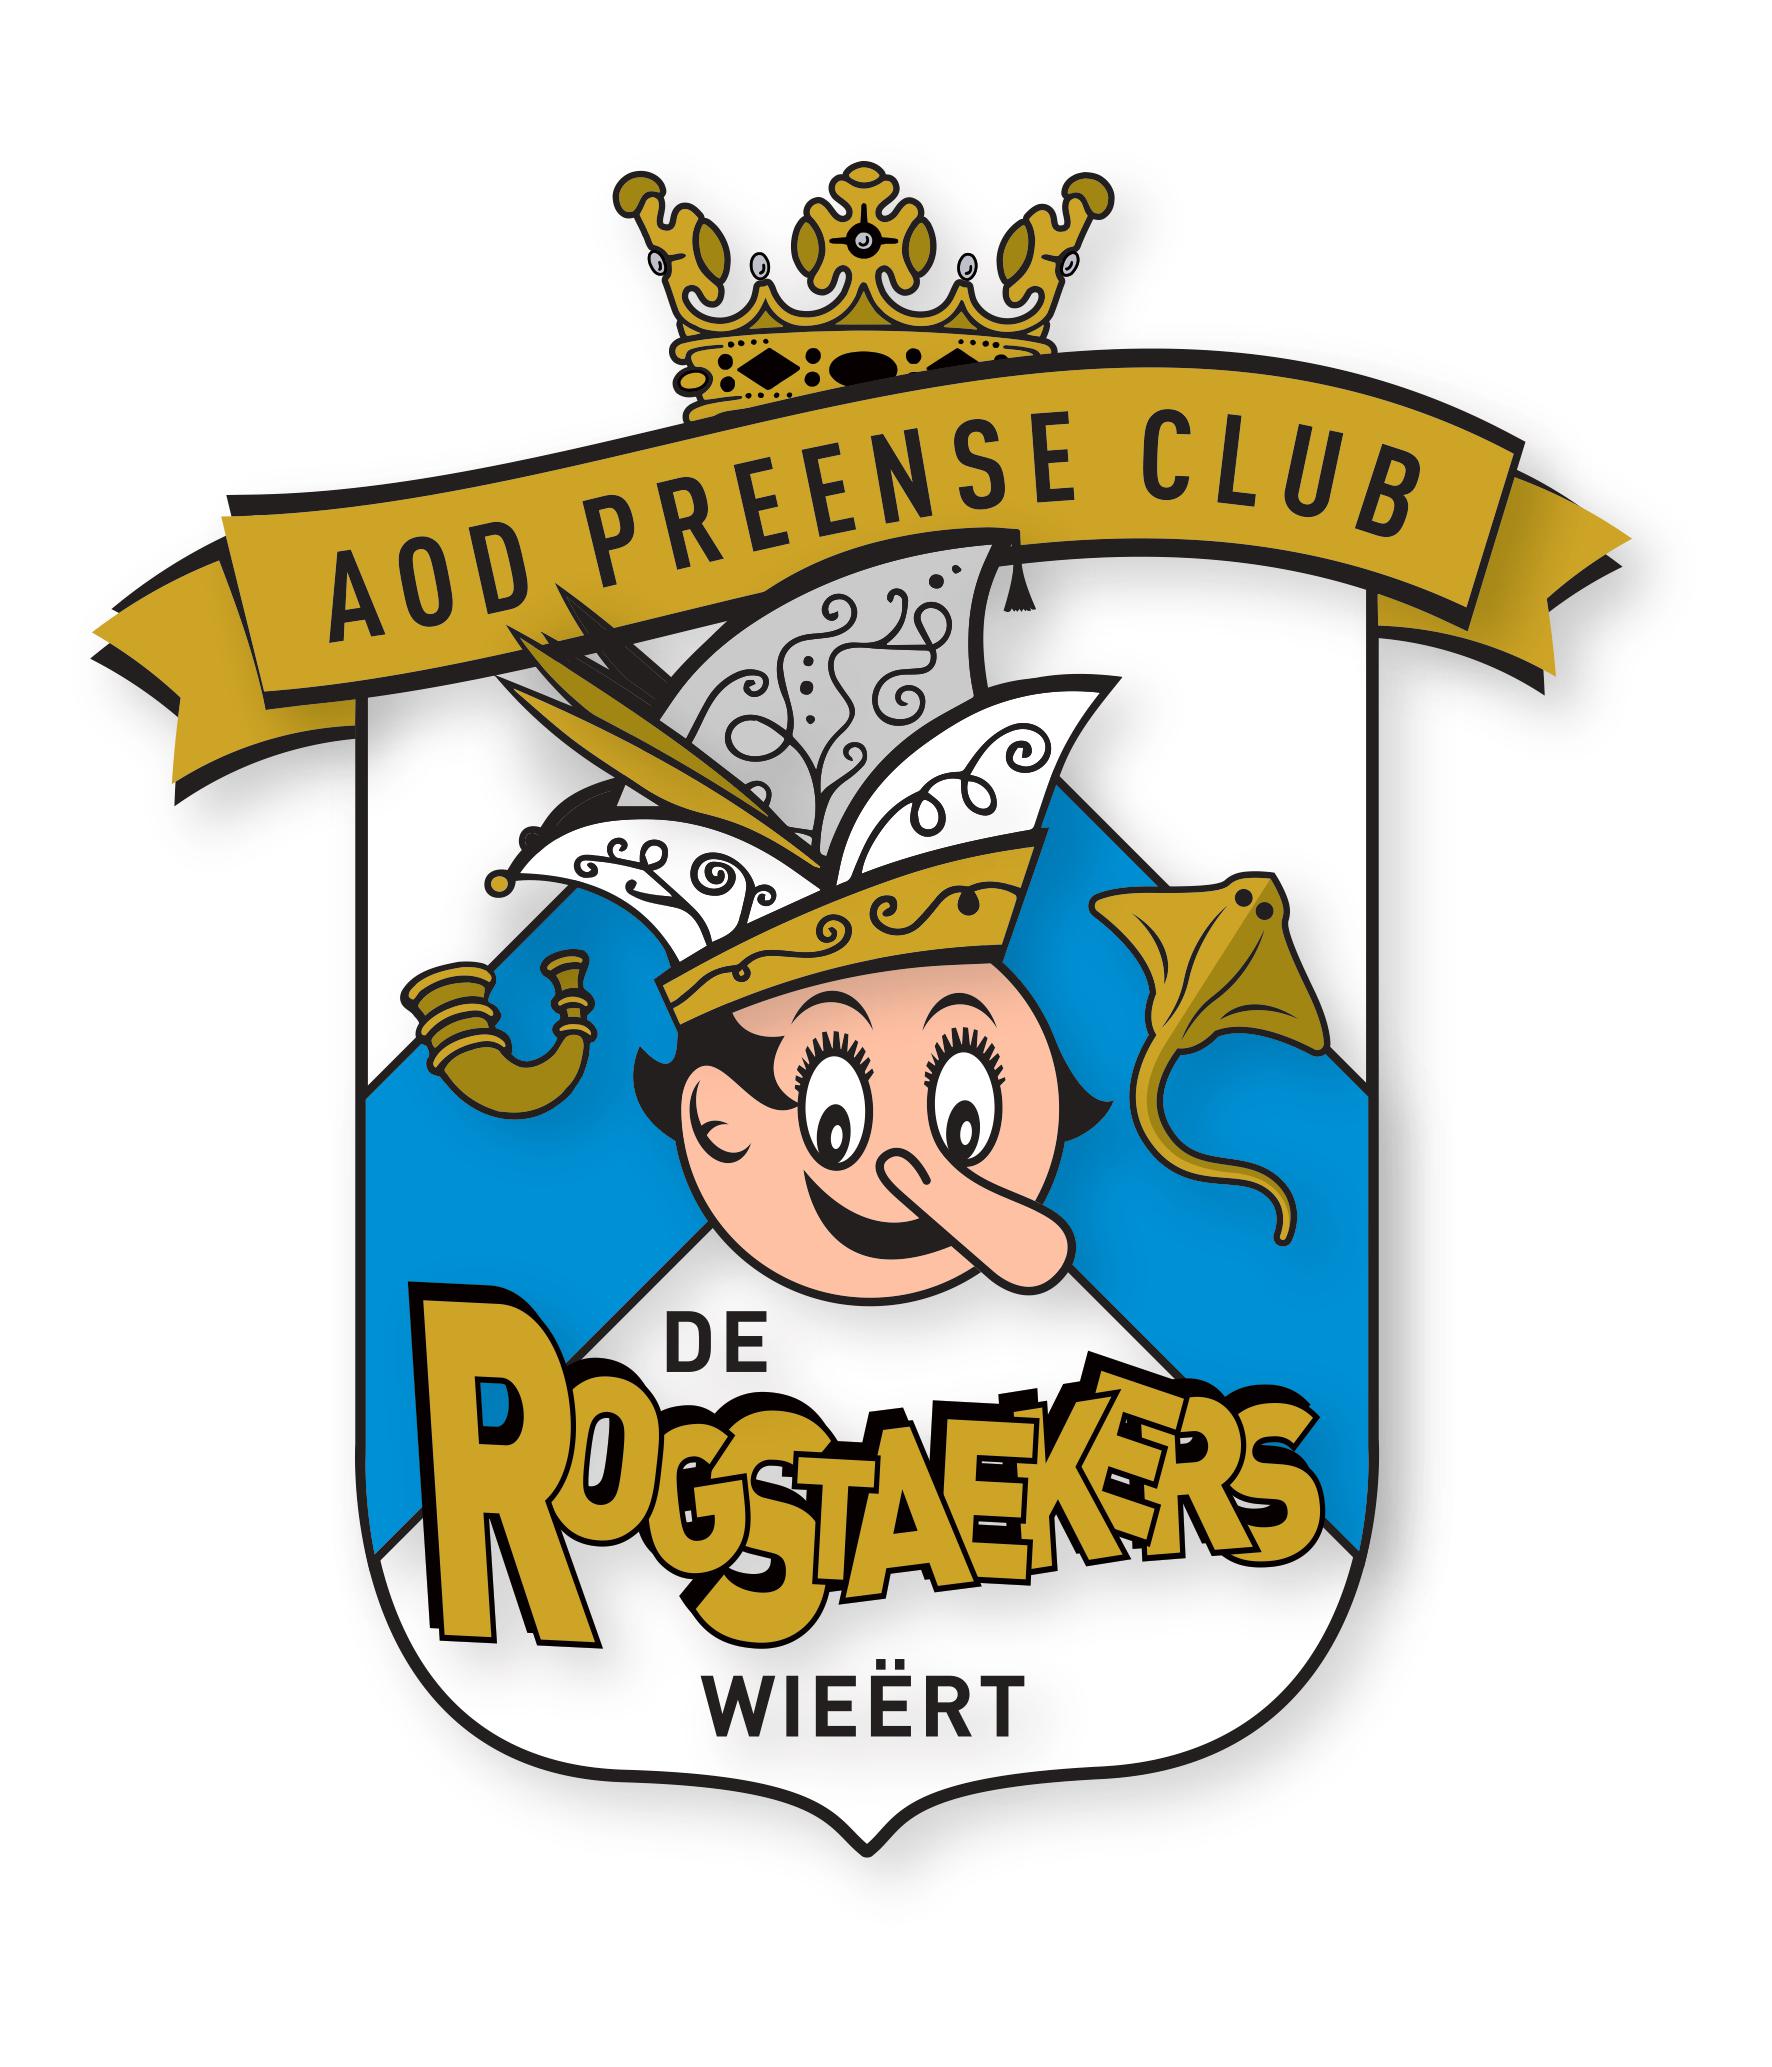 Aod Preense Club